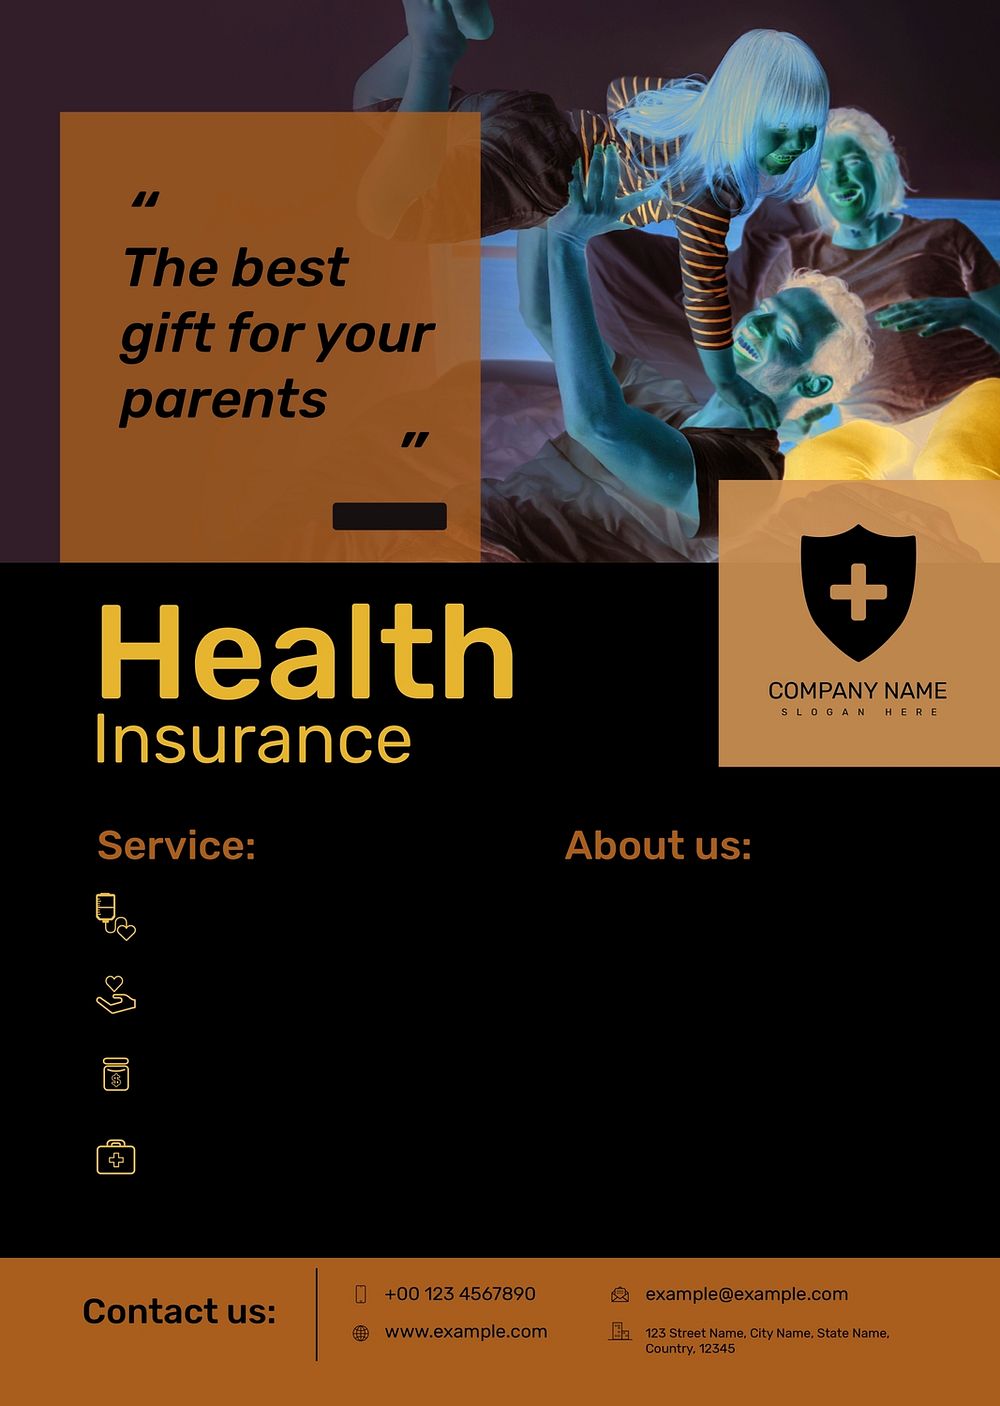 Health insurance template psd with editable text set